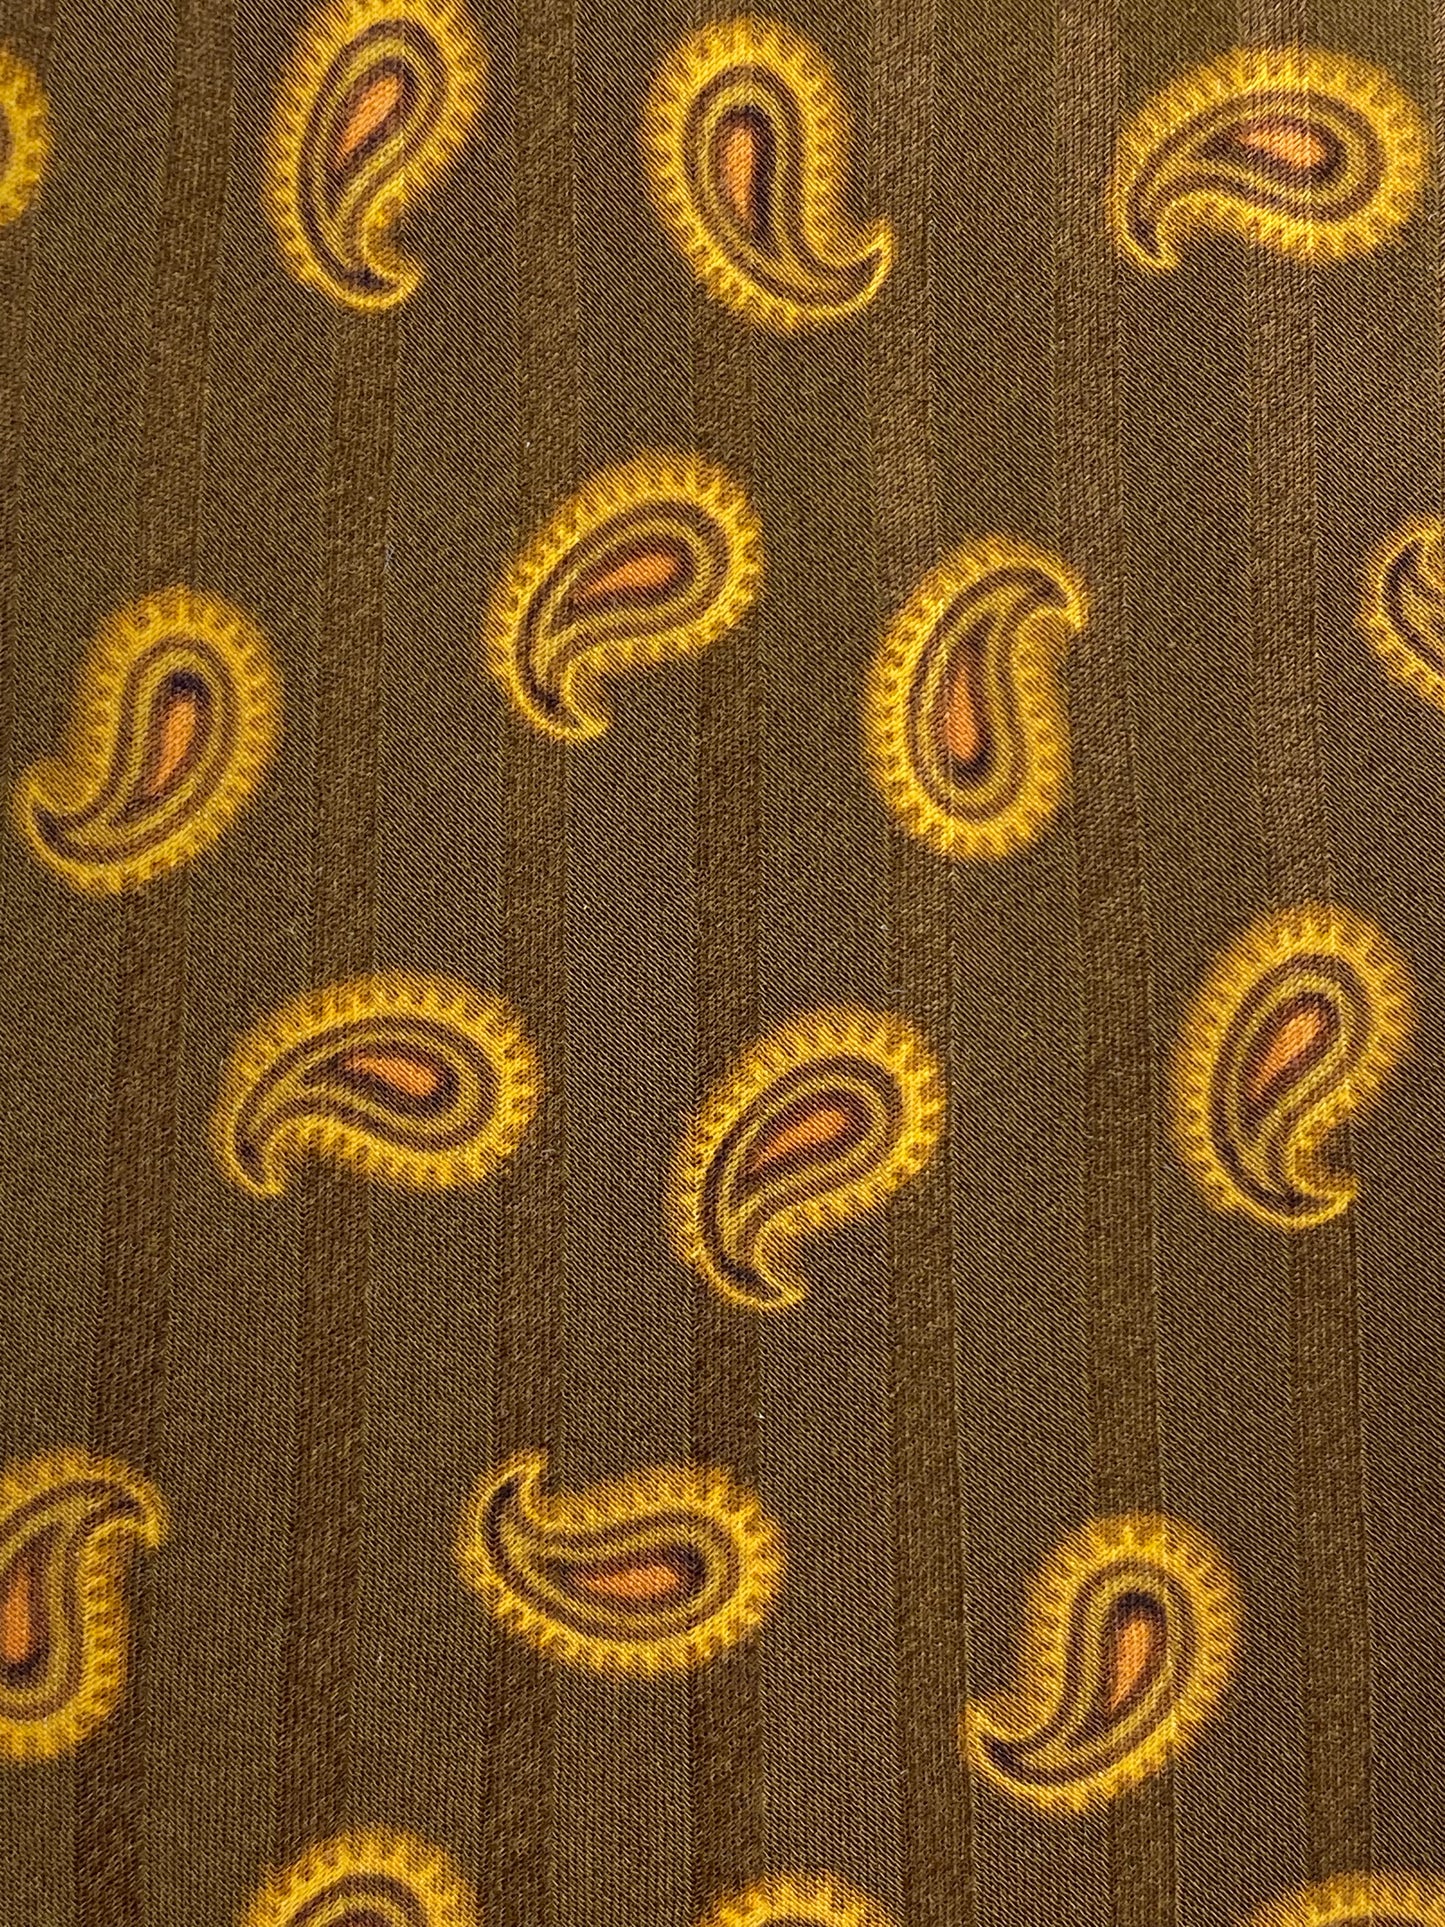 Close-up detail of: 90s Deadstock Silk Necktie, Men's Vintage Tawny Brown Paisley Boteh Pattern Tie, NOS